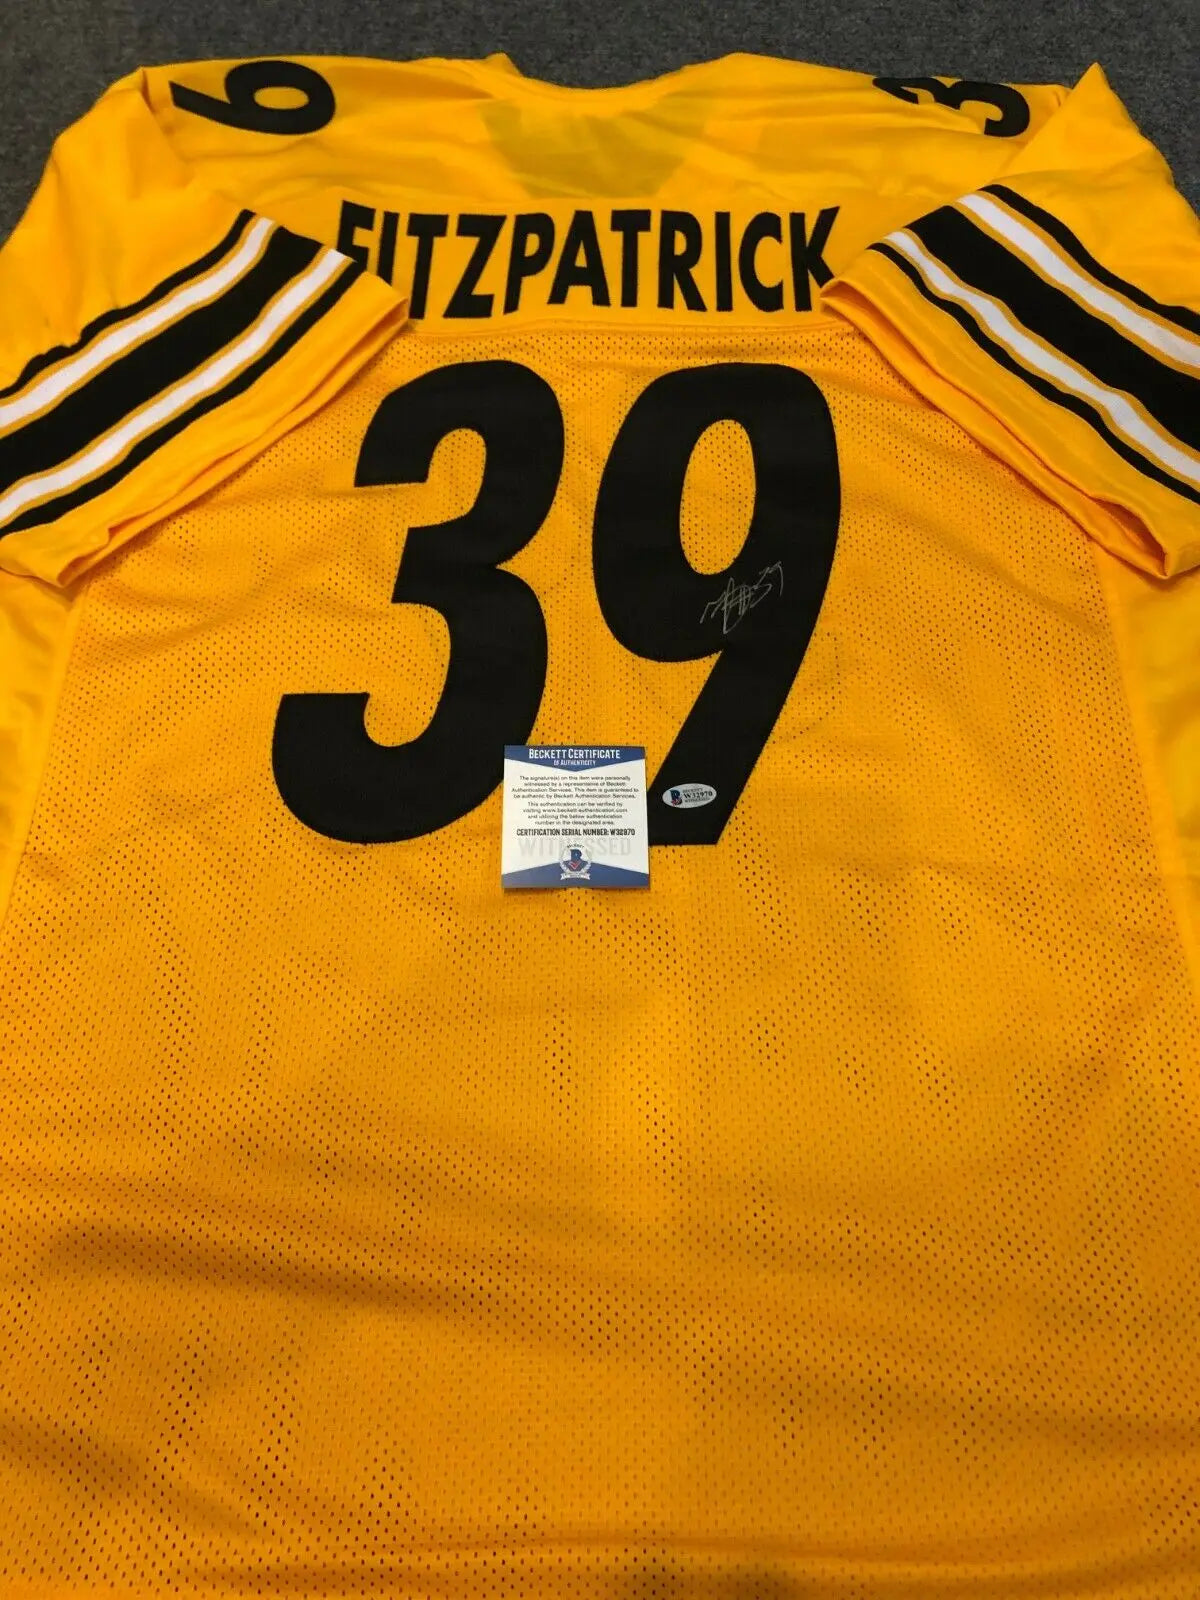 minkah fitzpatrick jersey stitched